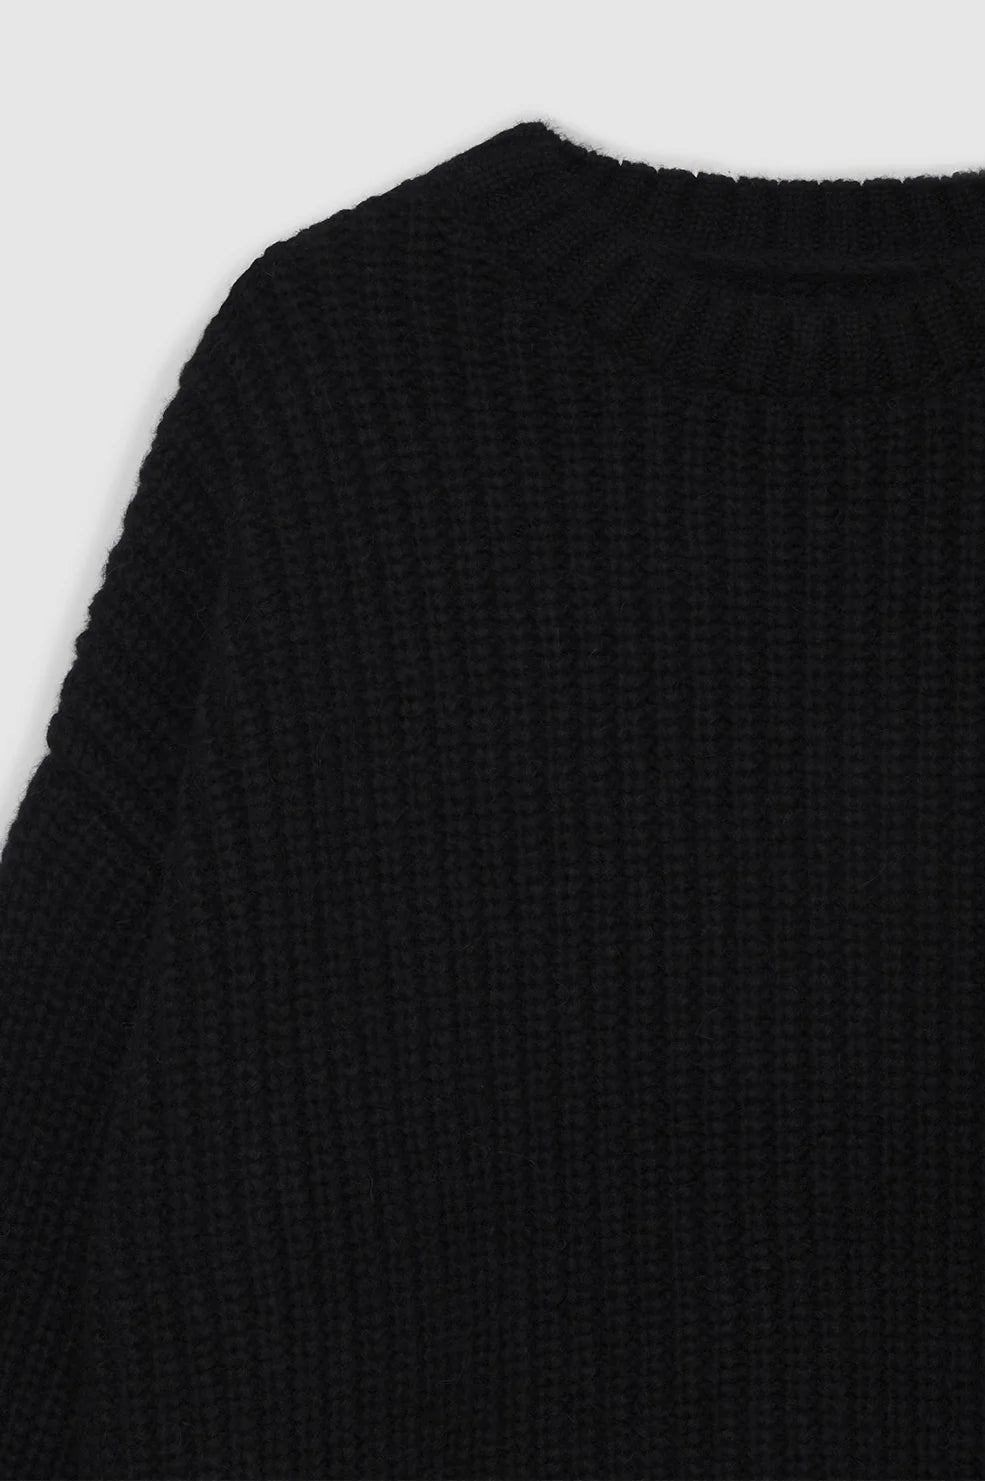 Sydney Crew Sweater in Black